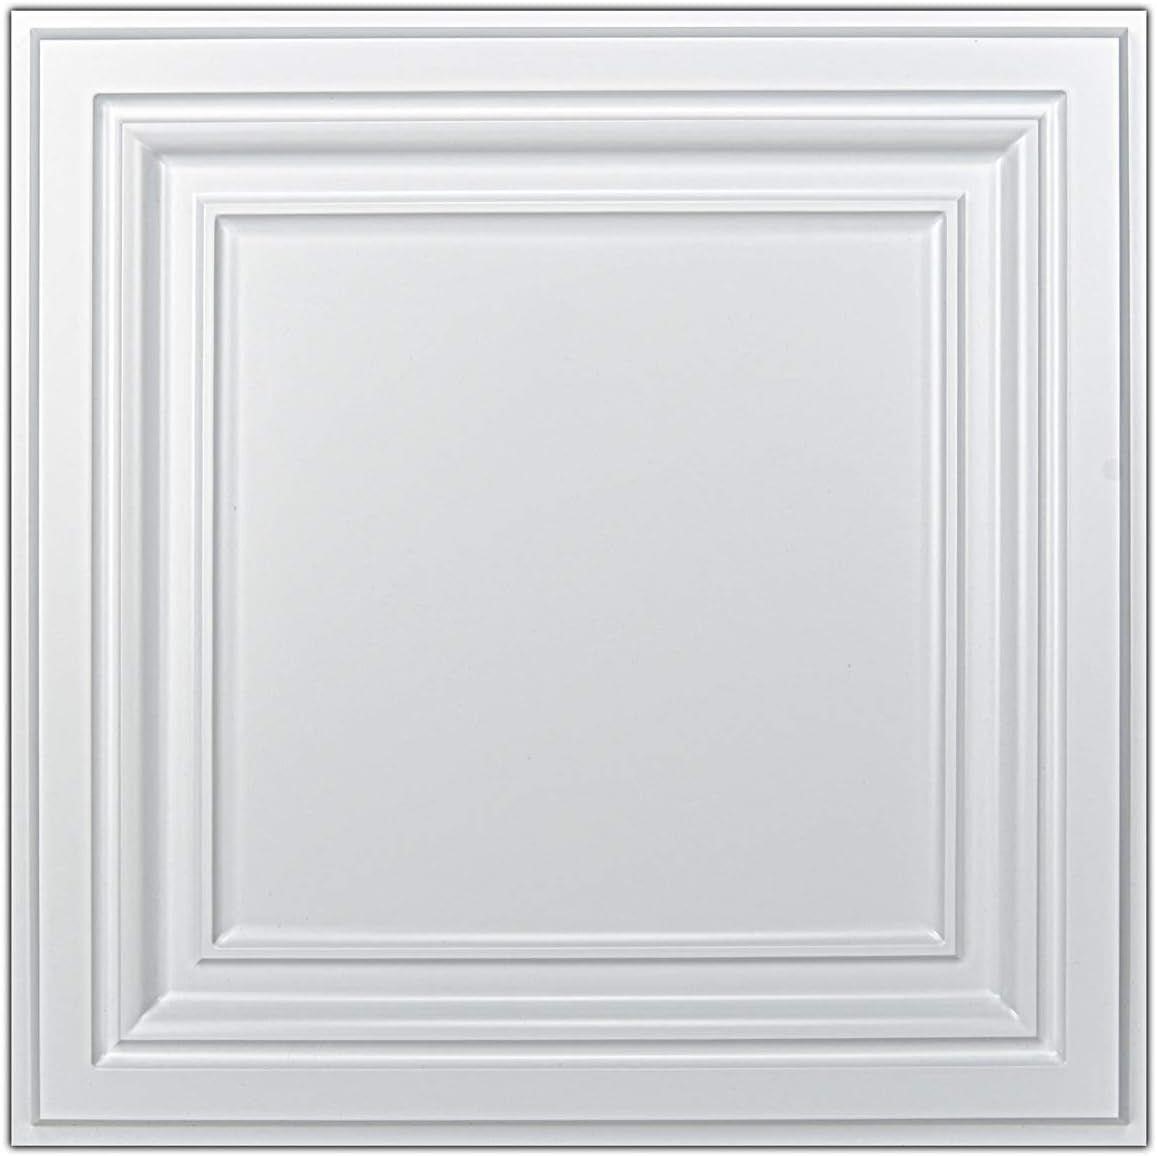 NEW $93 12PK PVC Ceiling Tiles 2'x2'